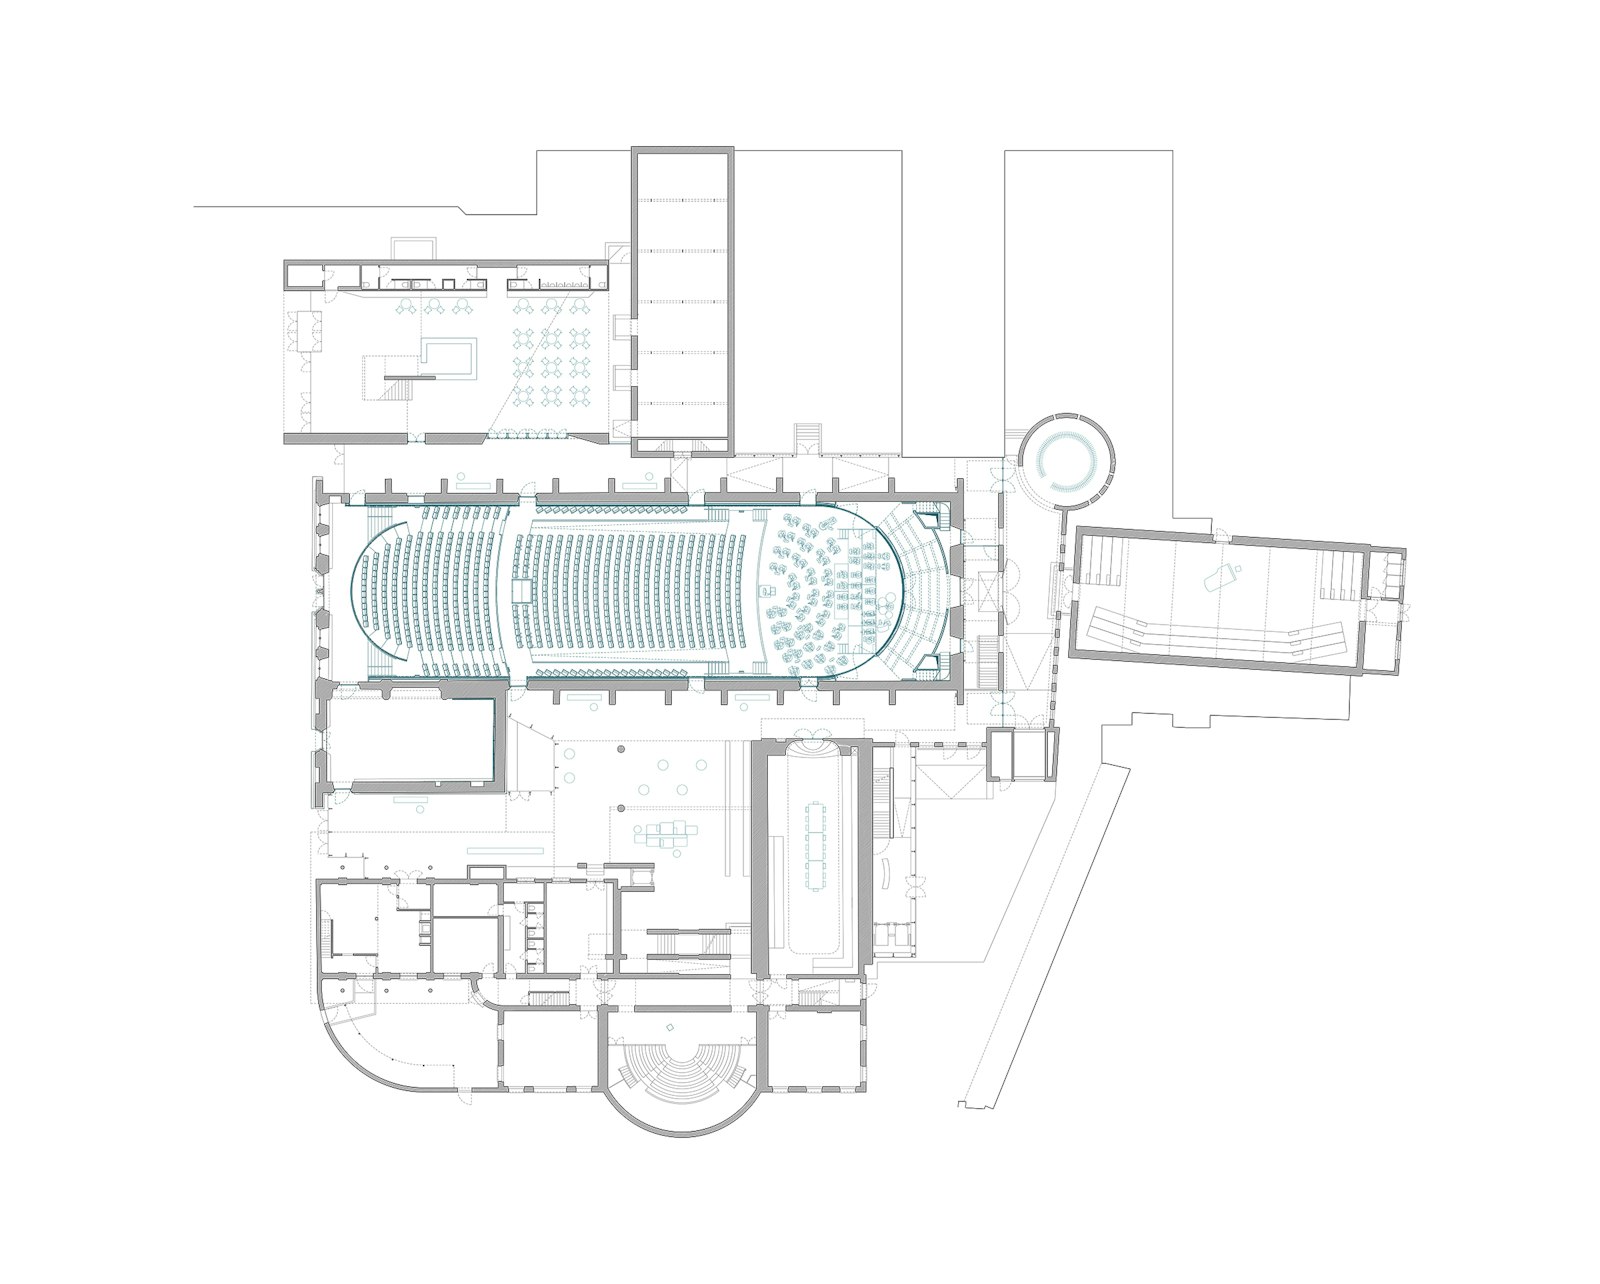 Muziekcentrum De Bijloke - Masterplan © DRDH Architects